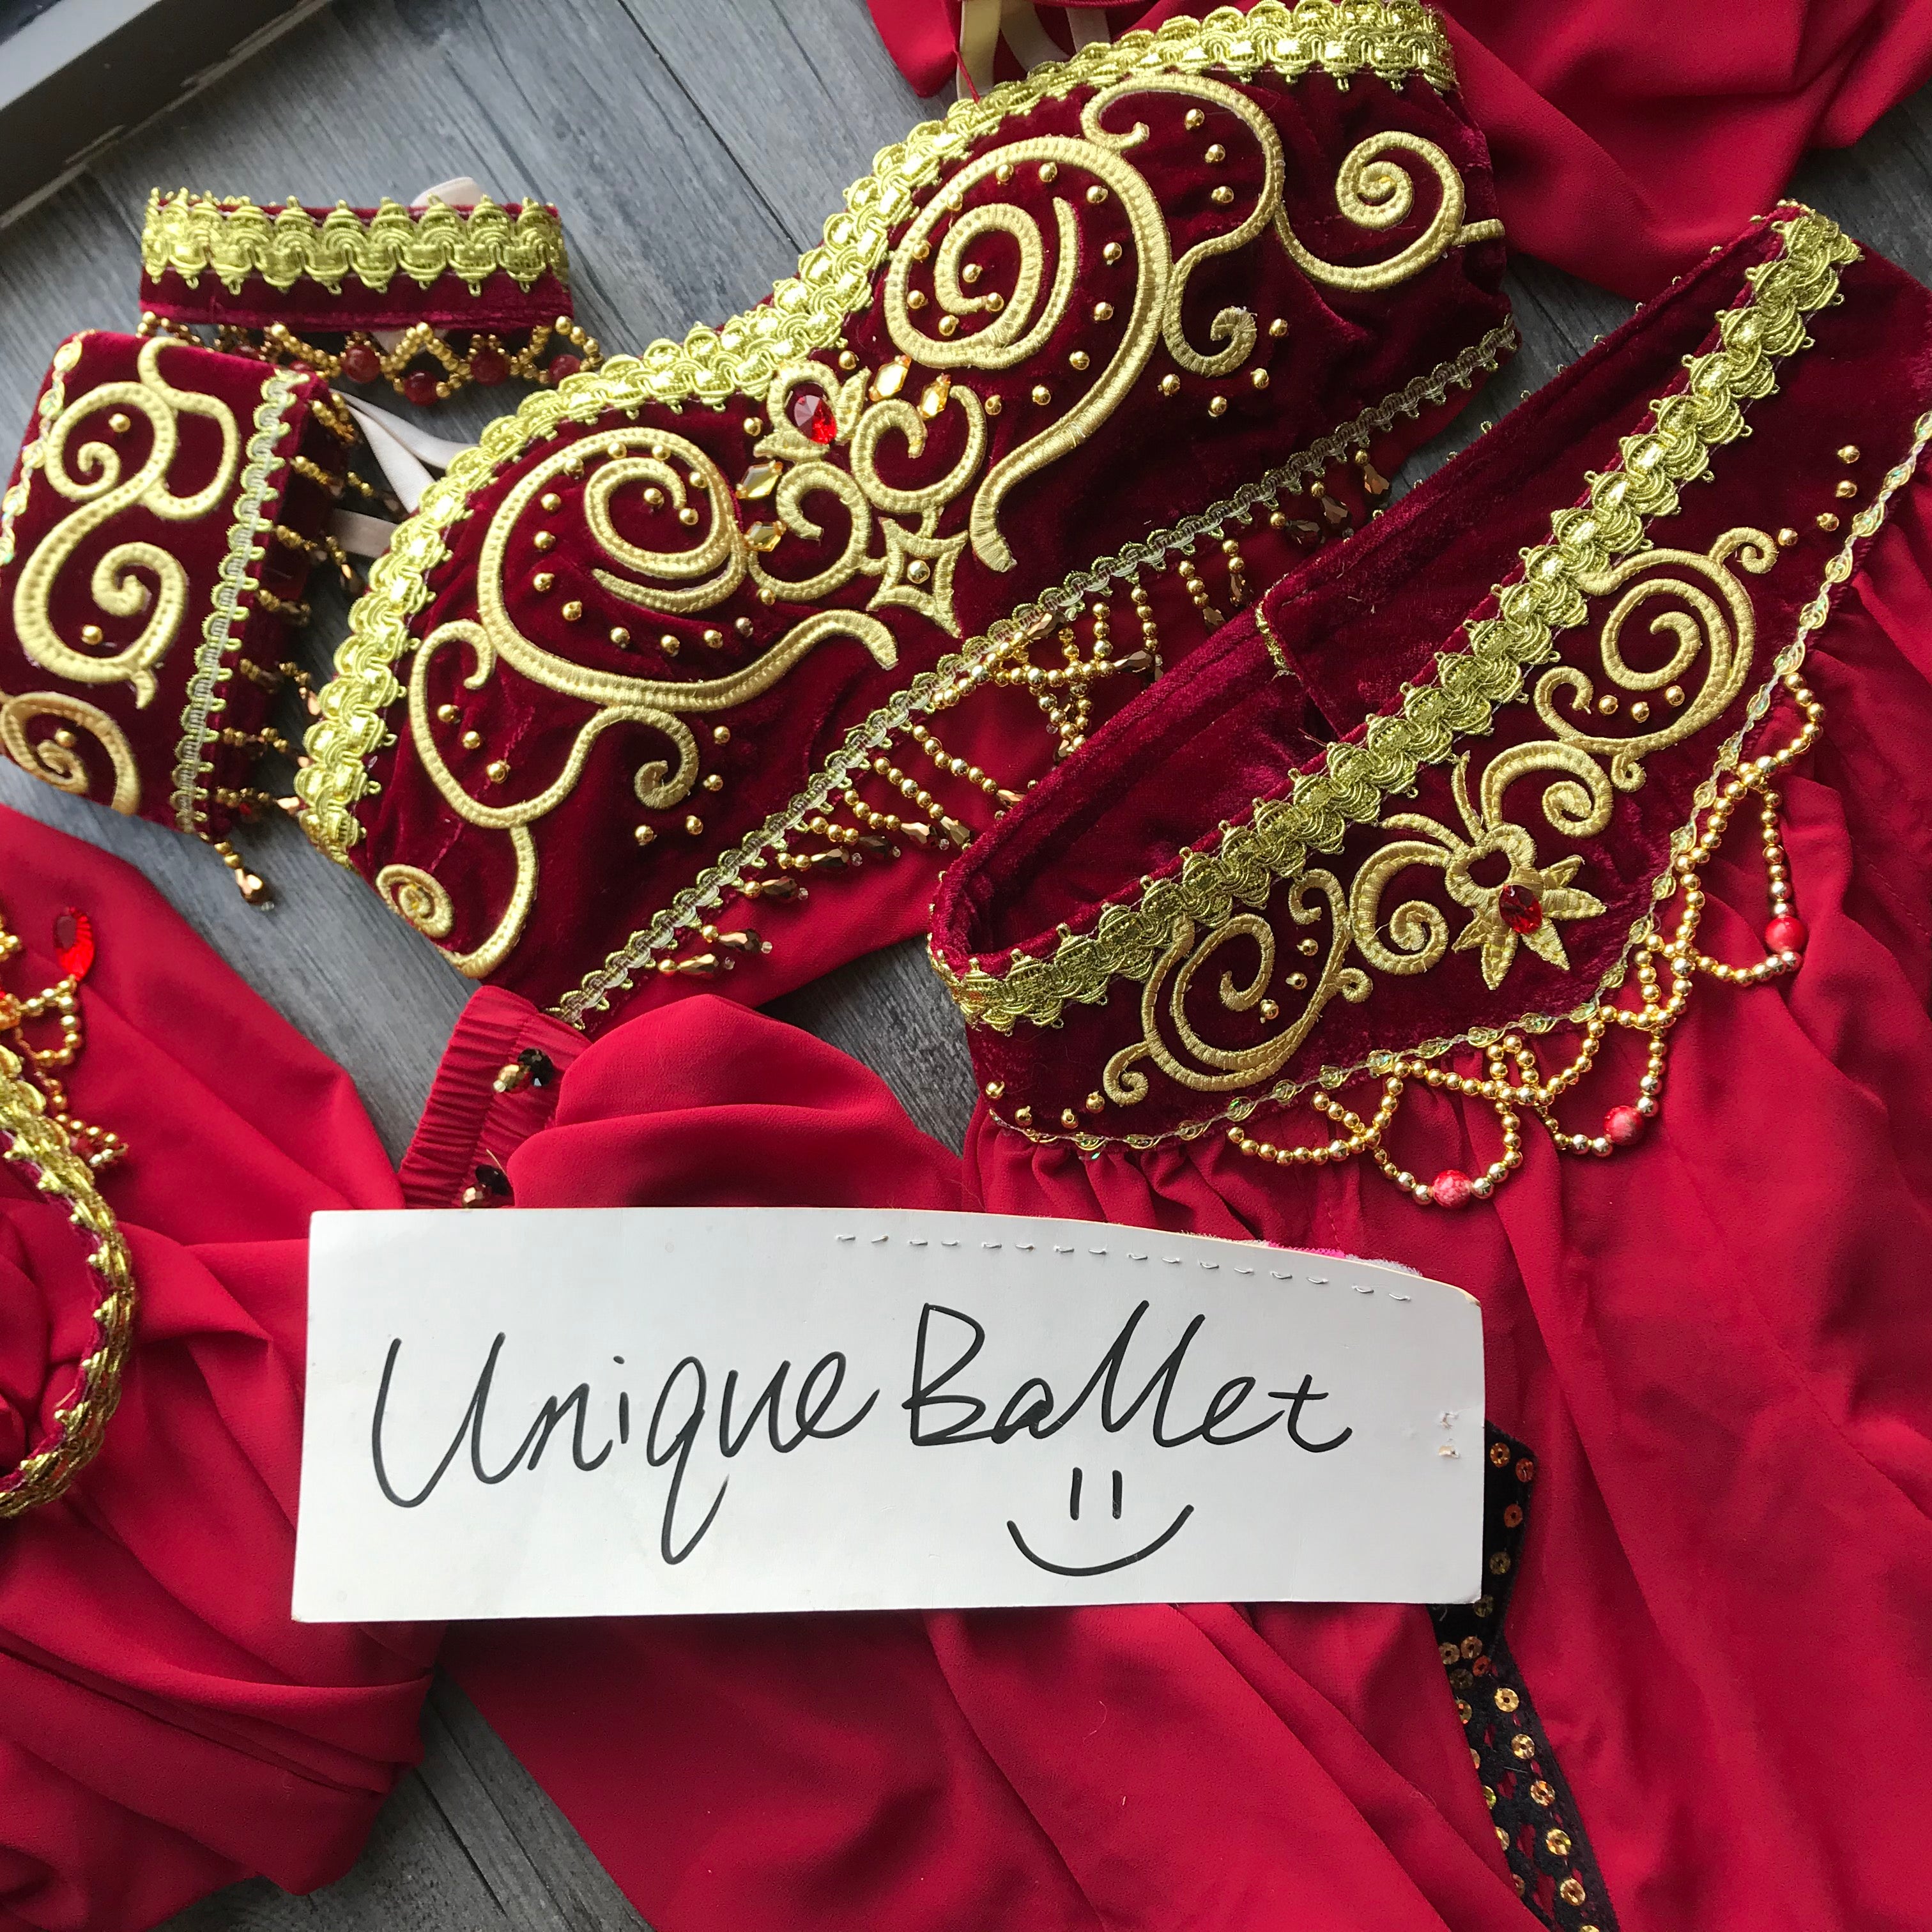 2 Pieces Burgandy Win Red Arabian Dance La Bayadere Nikija Indian Crop Top and Pants Ballet Costume